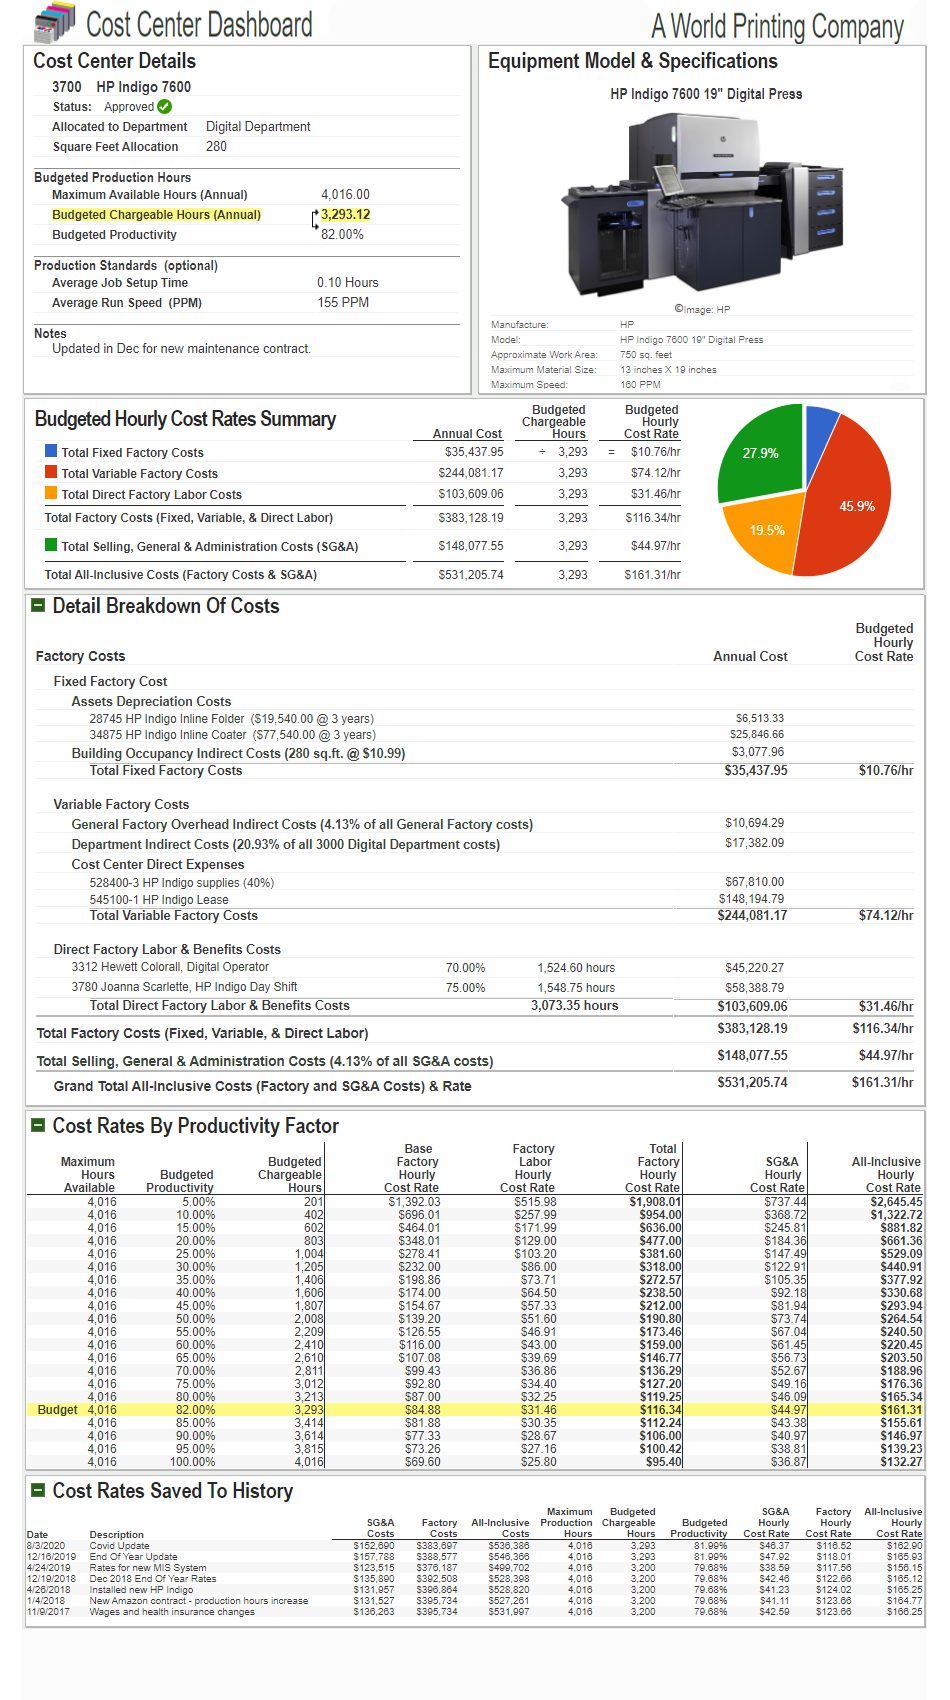 HP Indigo Digital Press budgeted hourly rates